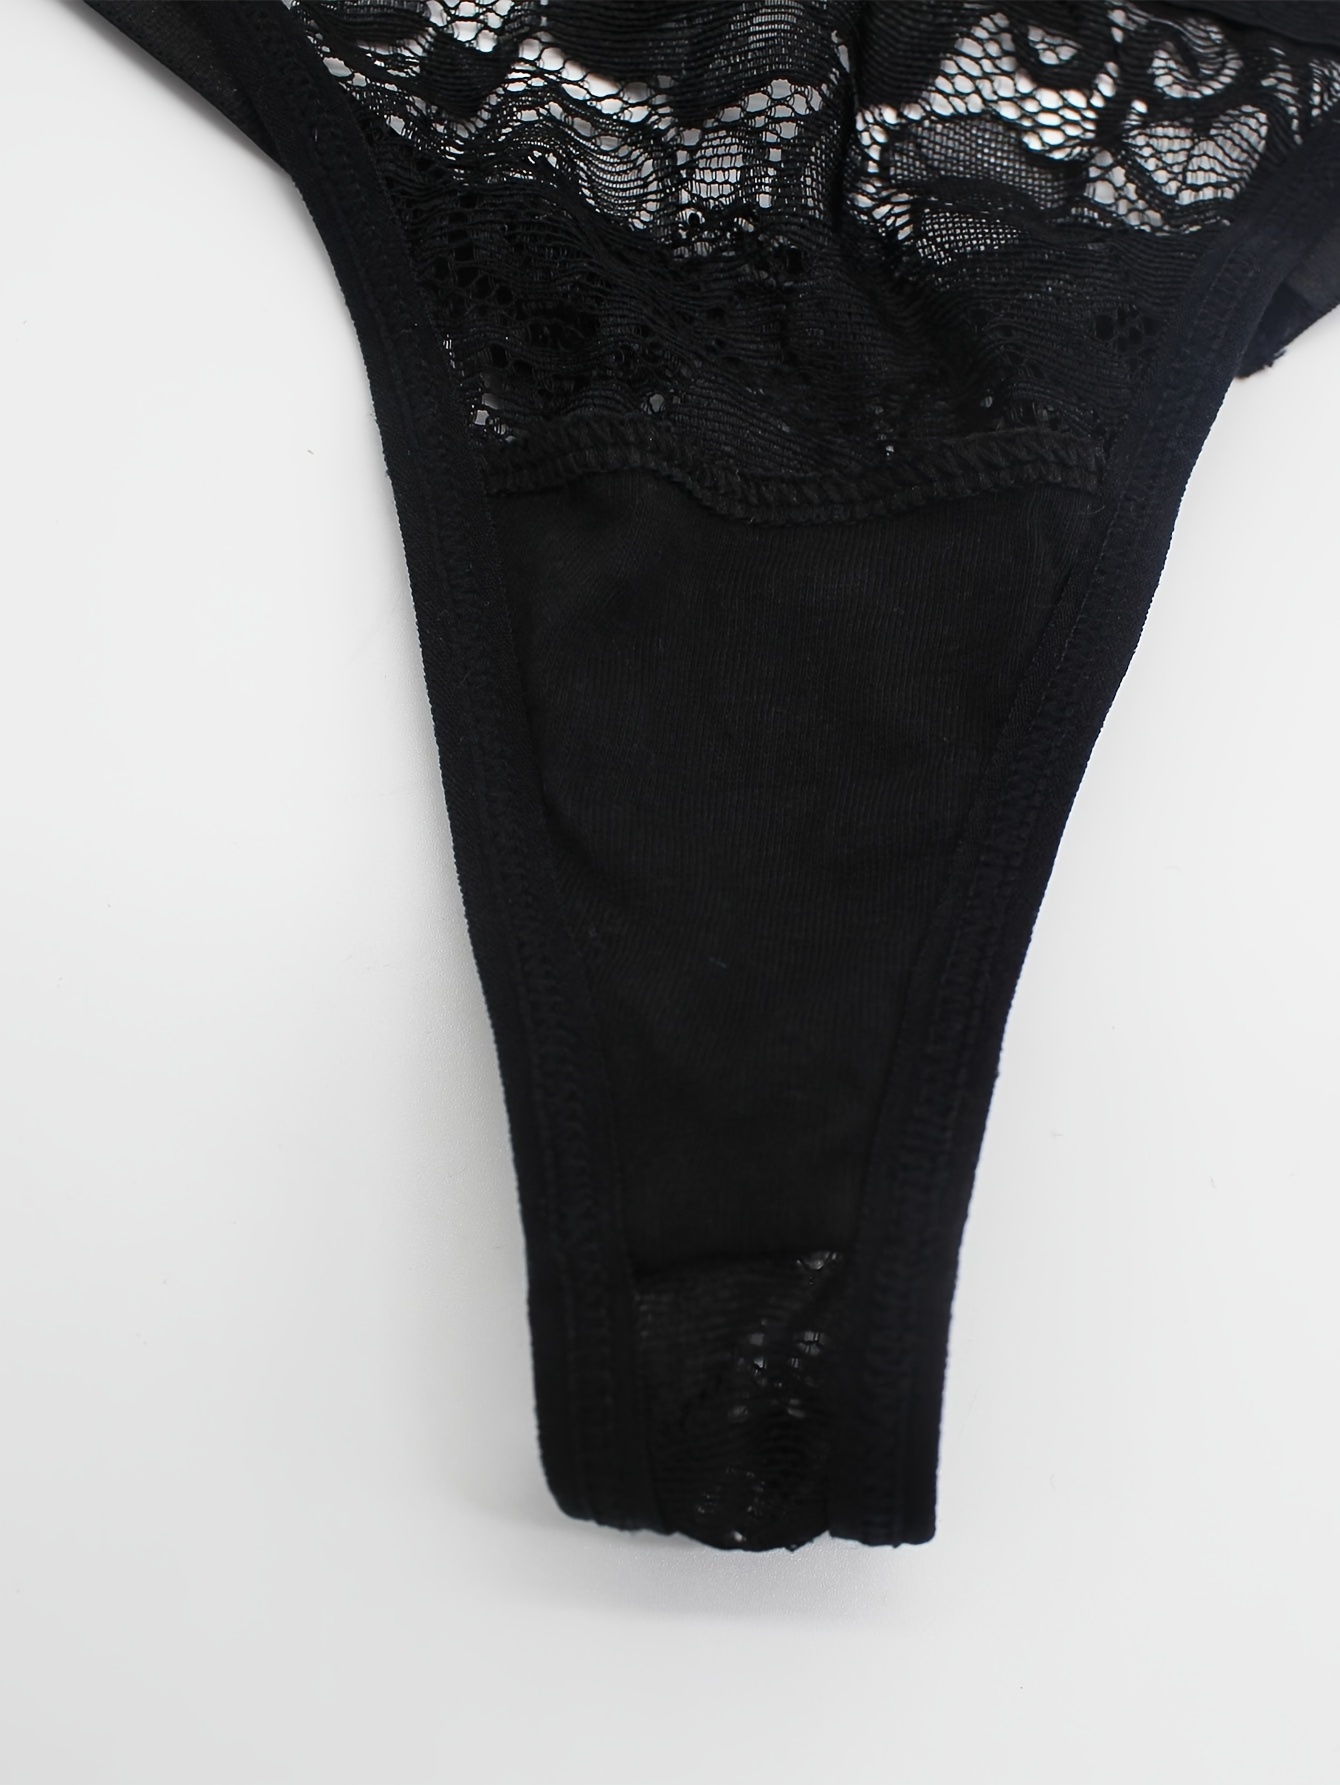 ClodeEU Sexy Women Lace Flowers Low Waist Underwear Panties G-String  Lingerie Thongs (Black XXXXXL) 